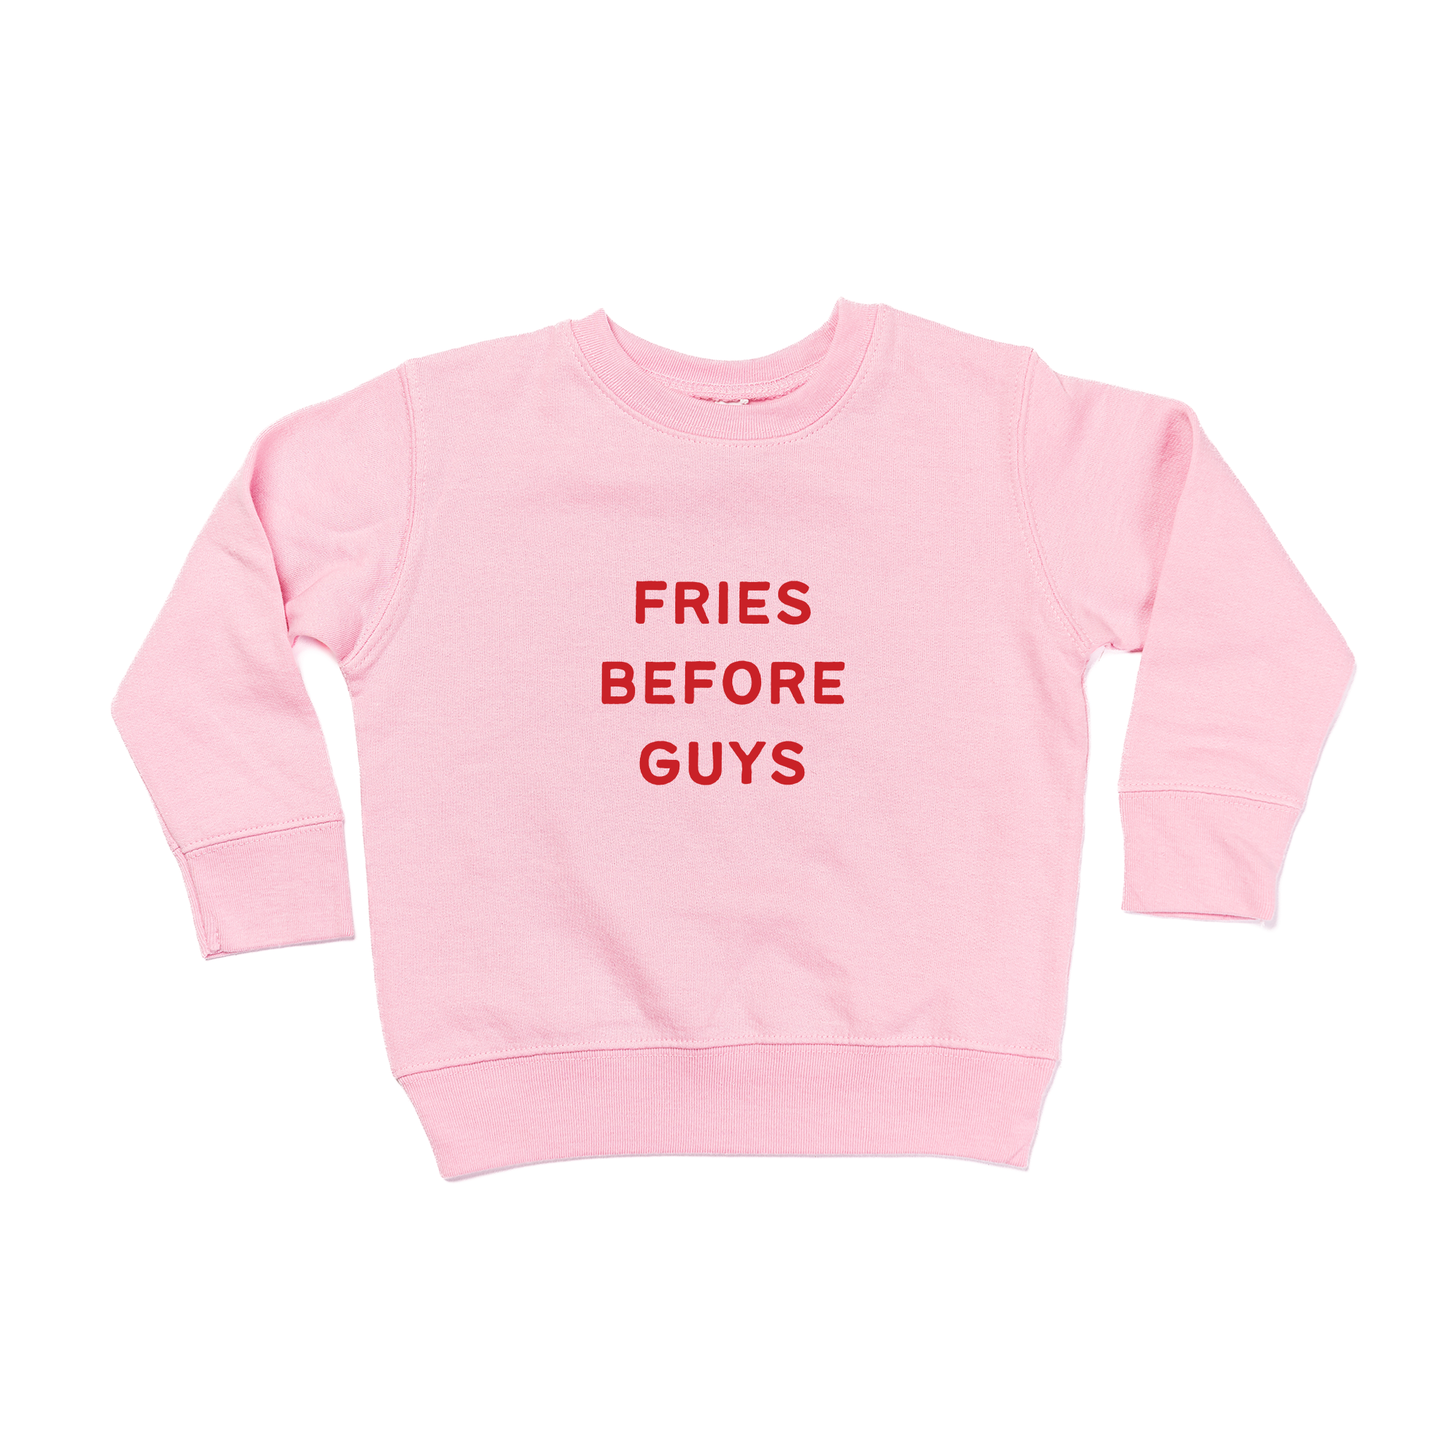 Fries Before Guys (Red) - Kids Sweatshirt (Pink)